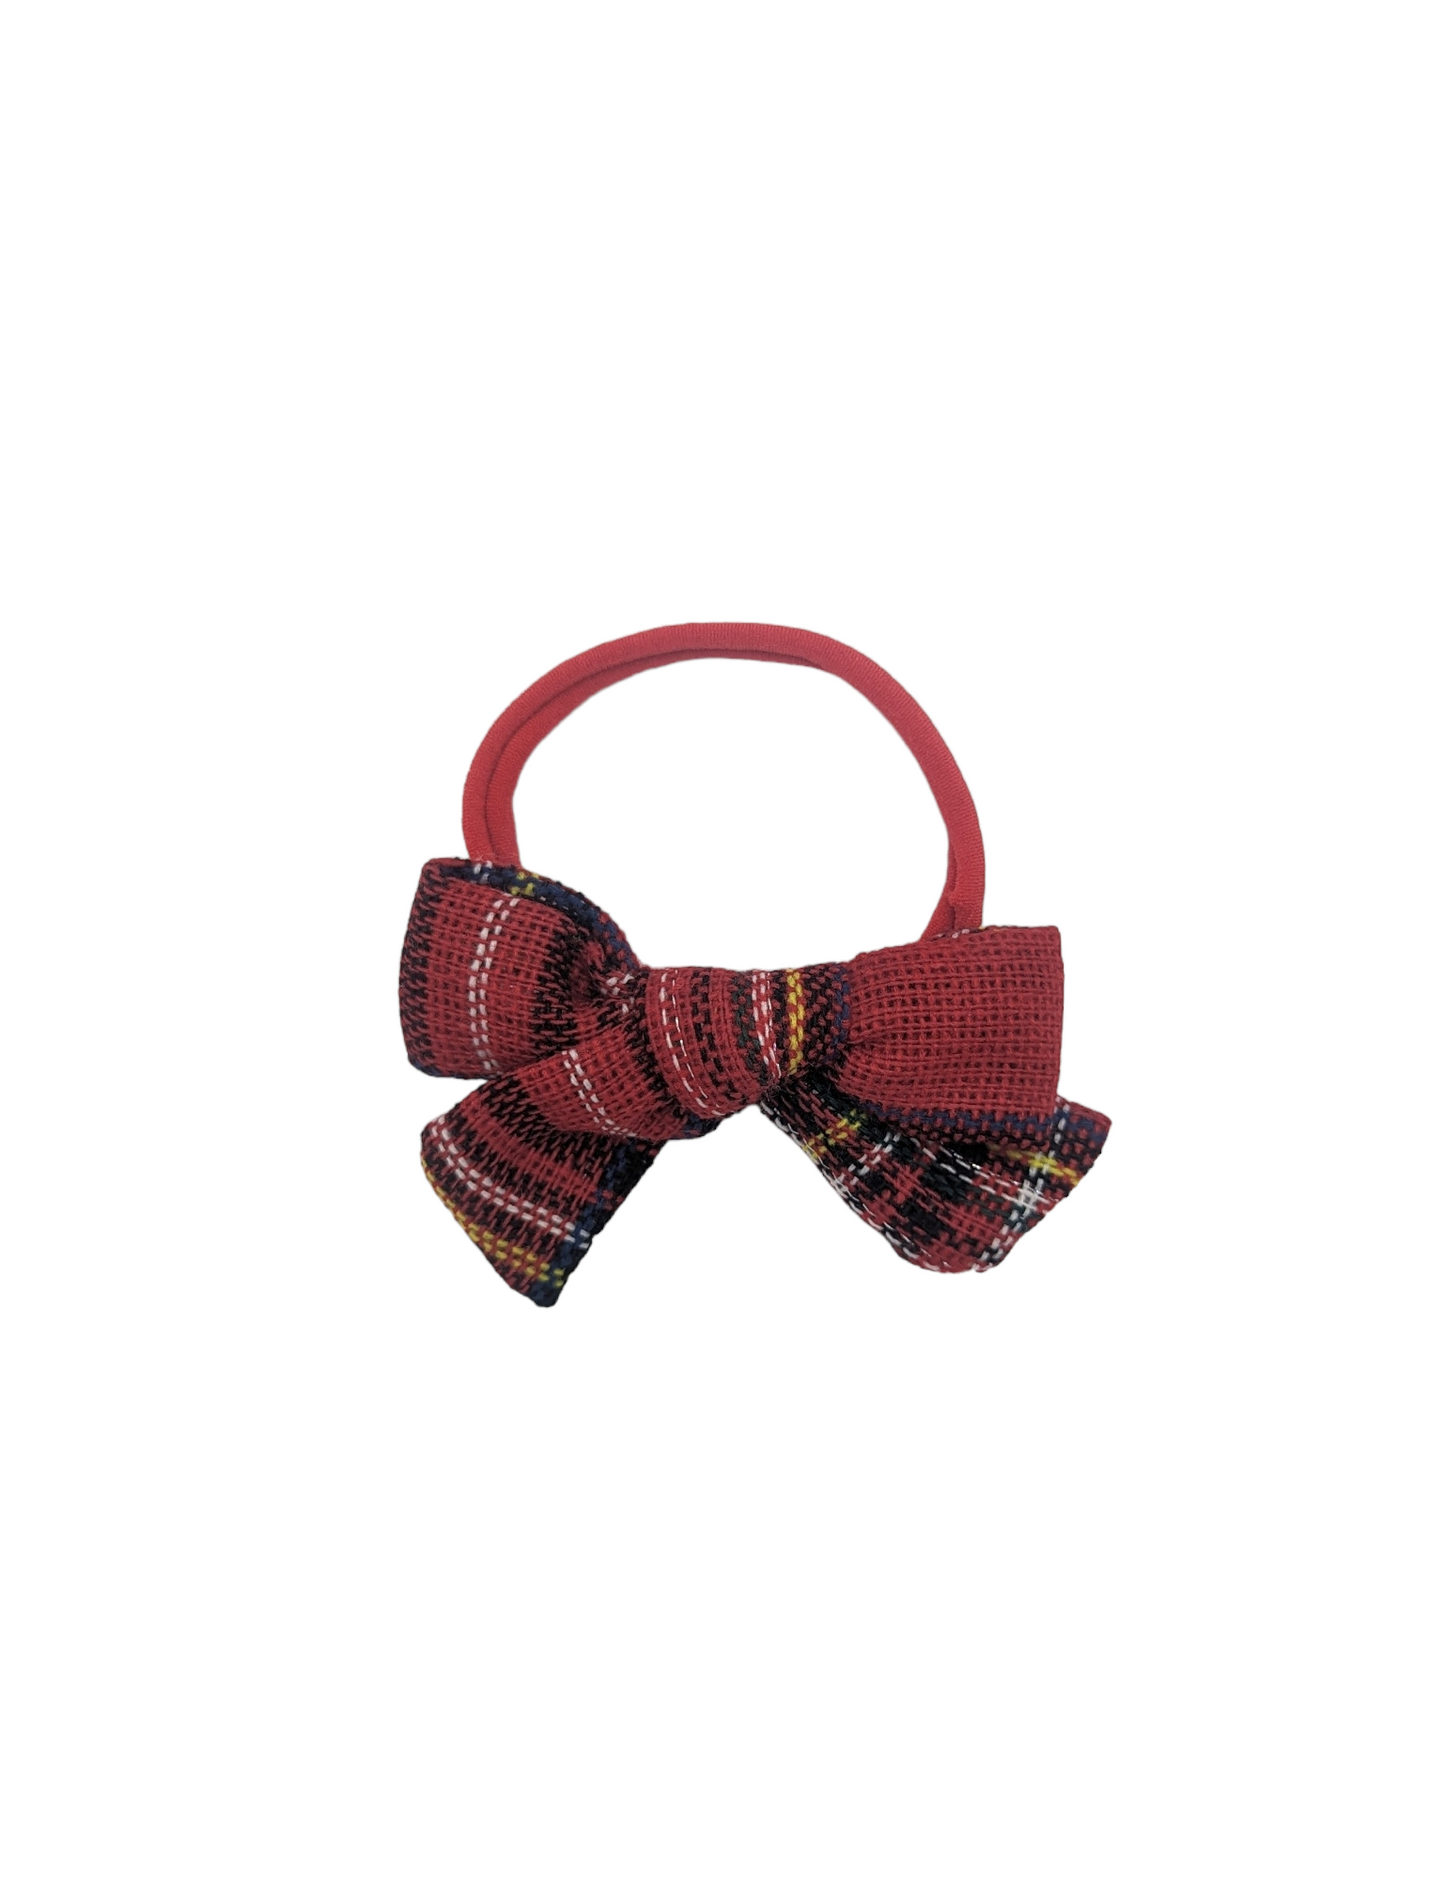 3.5 inch Tartan Dainty Bow Headband - Christmas Collection 2021 - Betty Brown Boutique Ltd